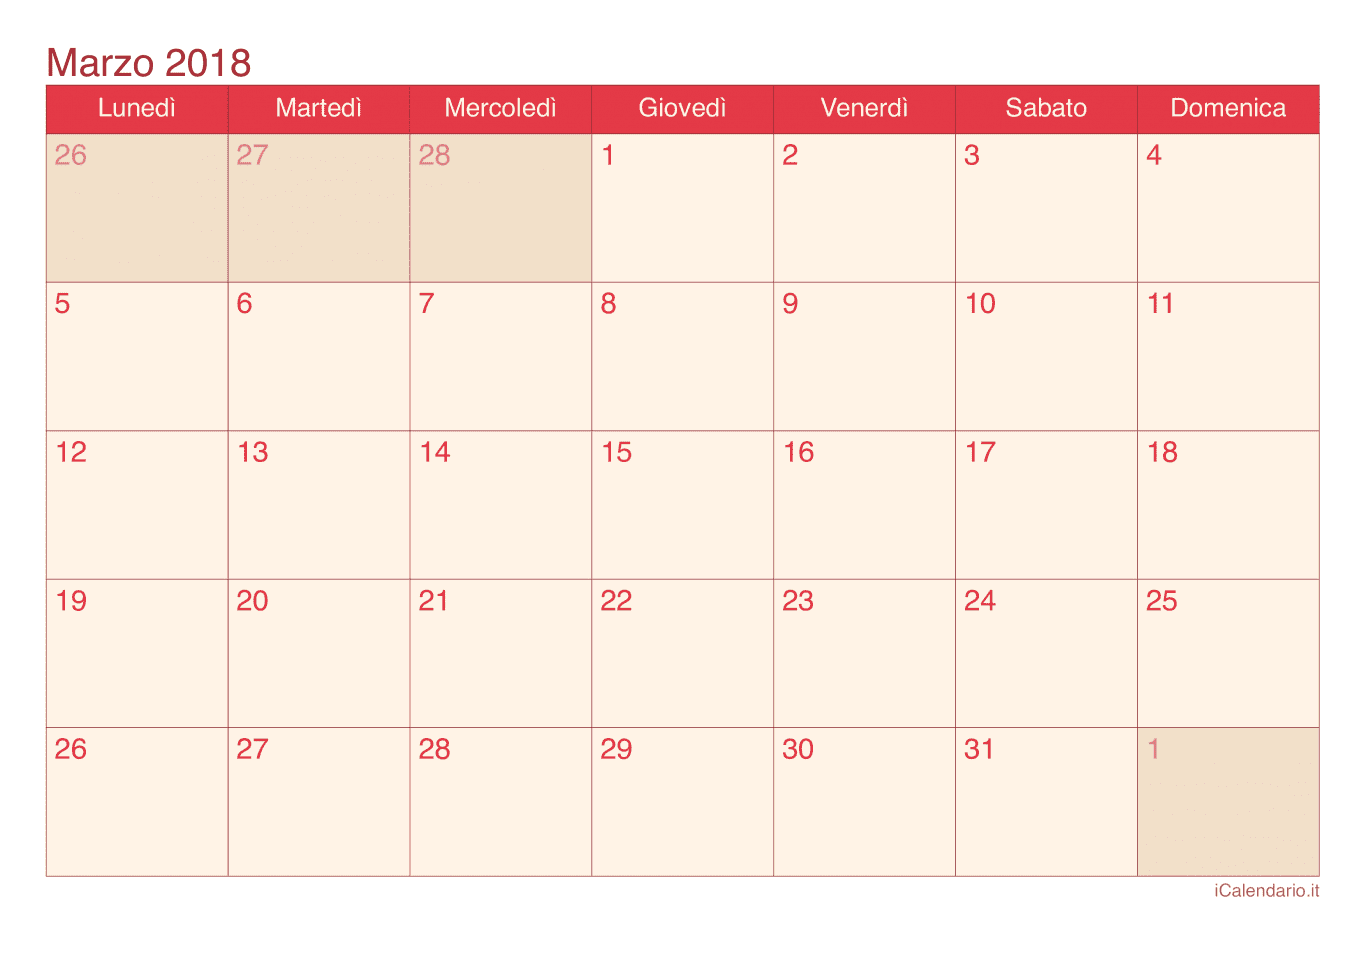 Calendario di marzo 2018 - Cherry